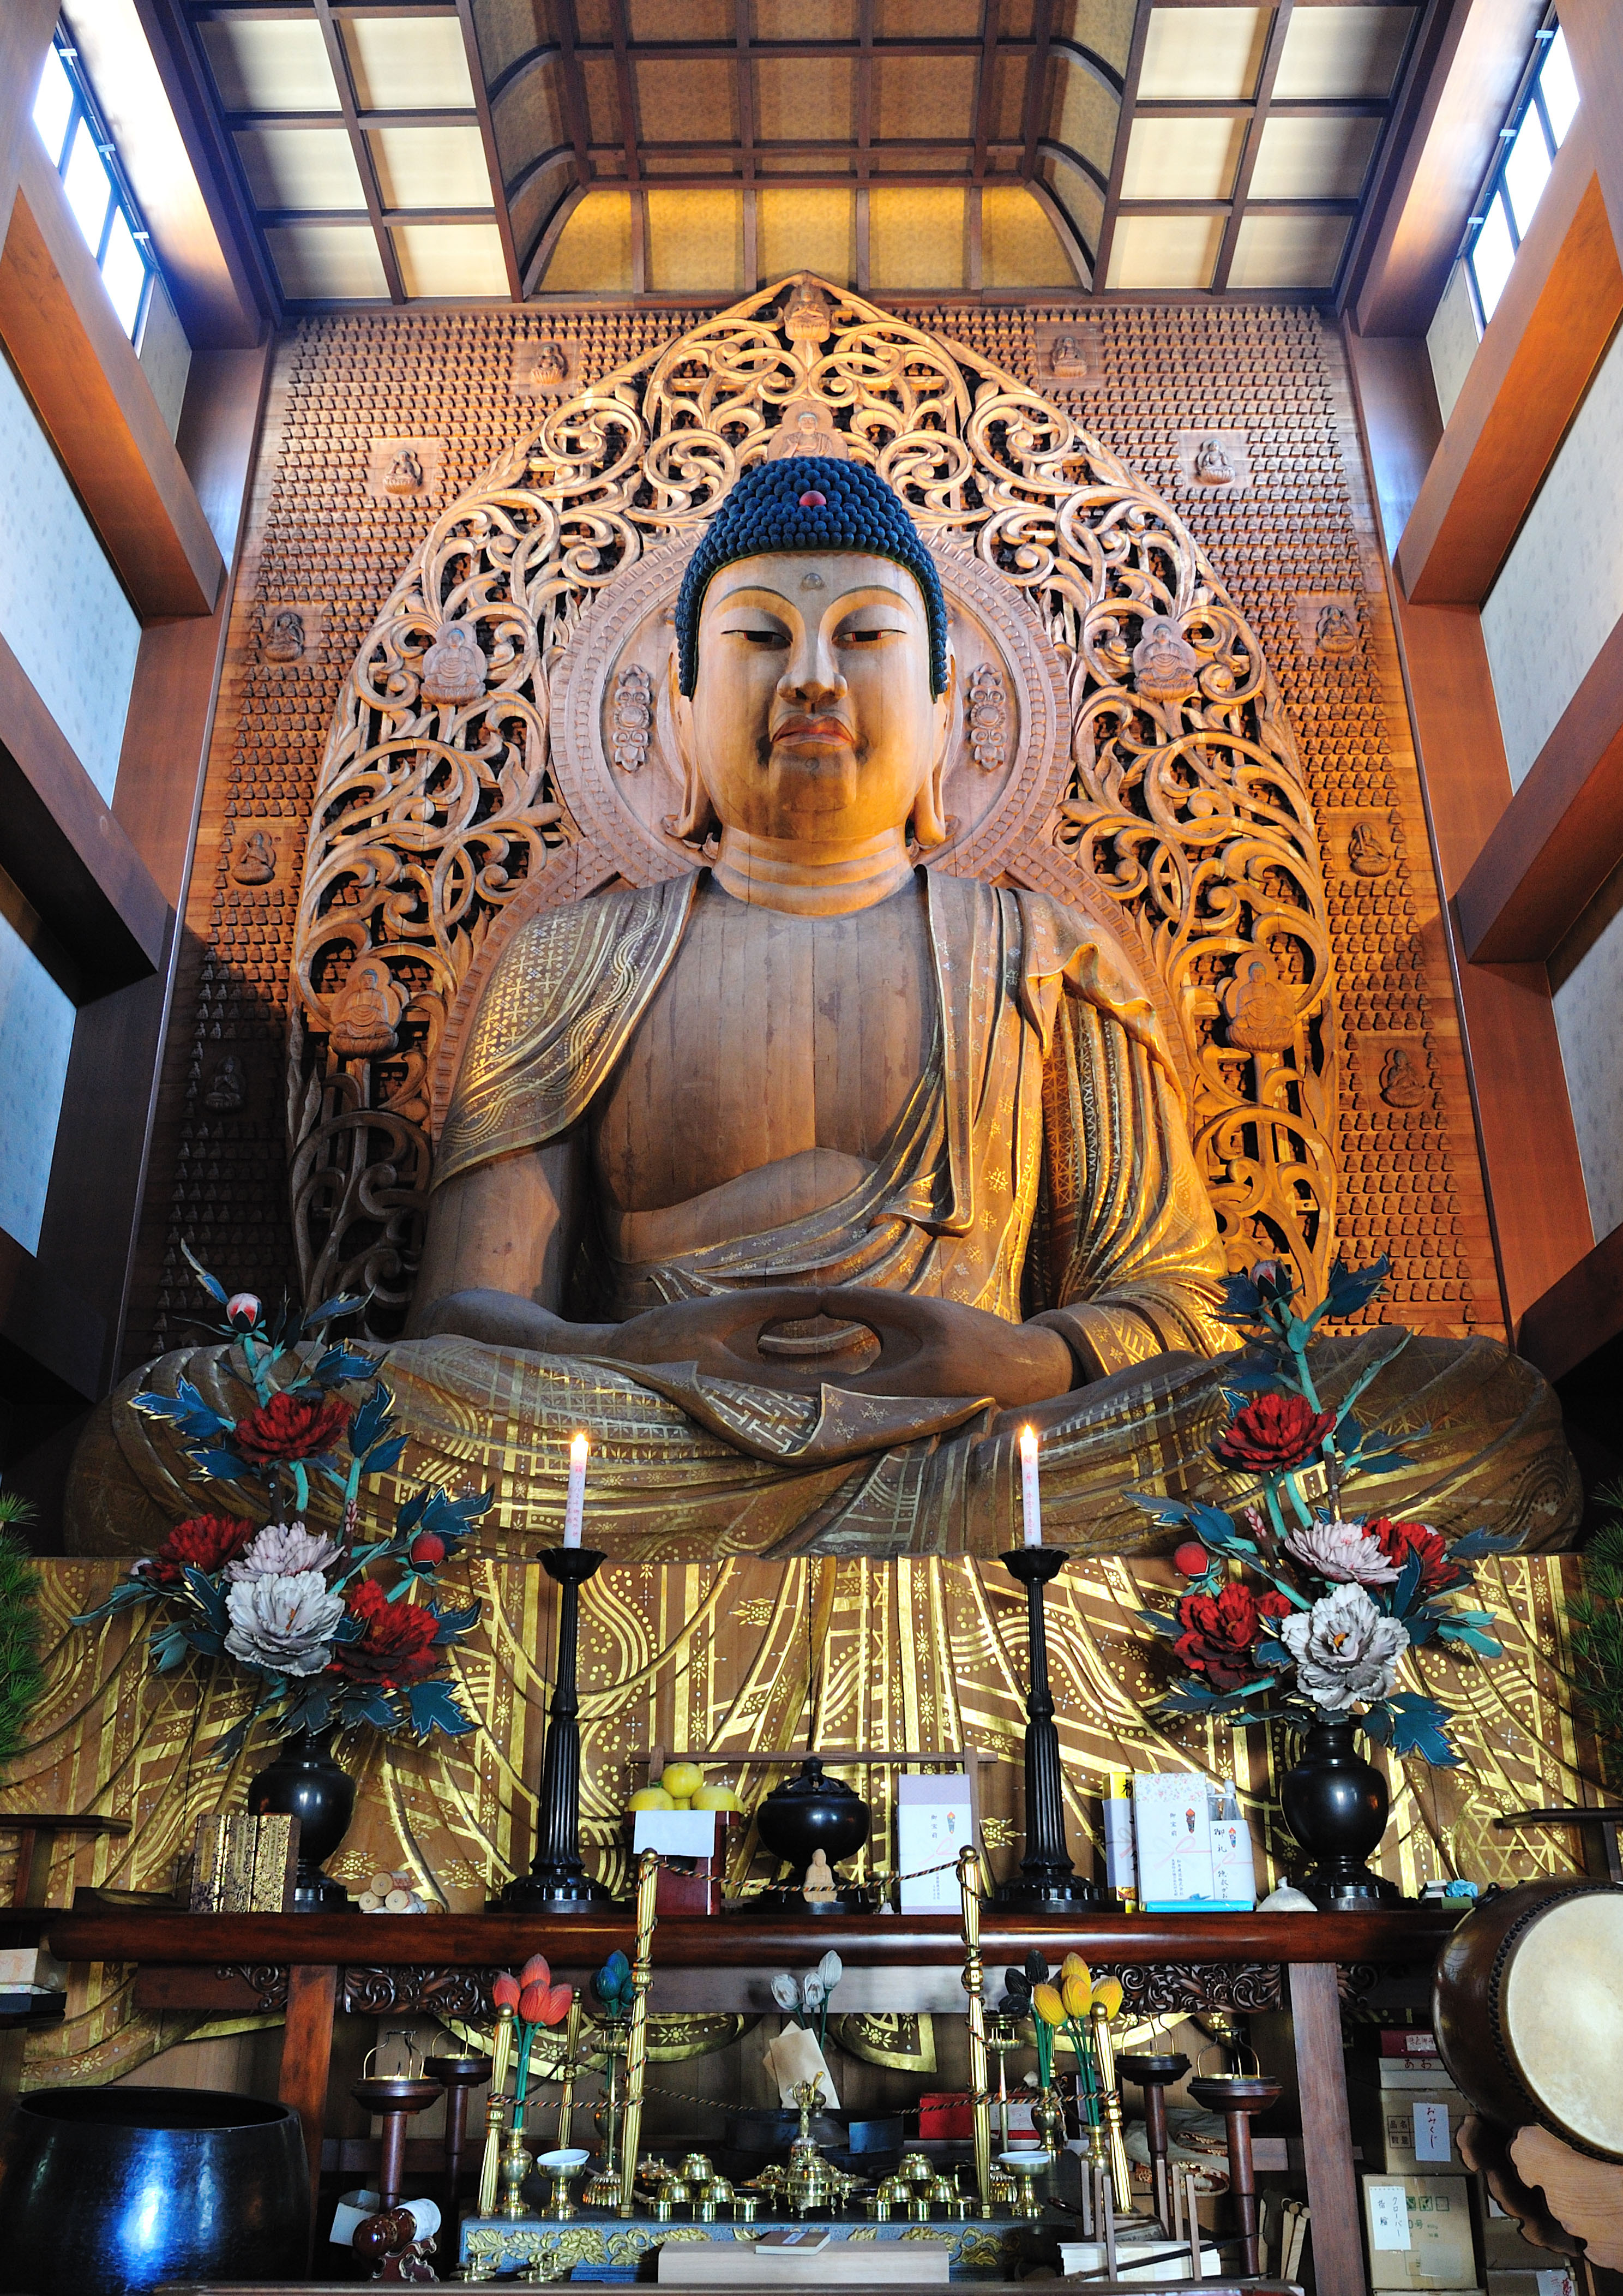 The Fukuoka Great Buddha